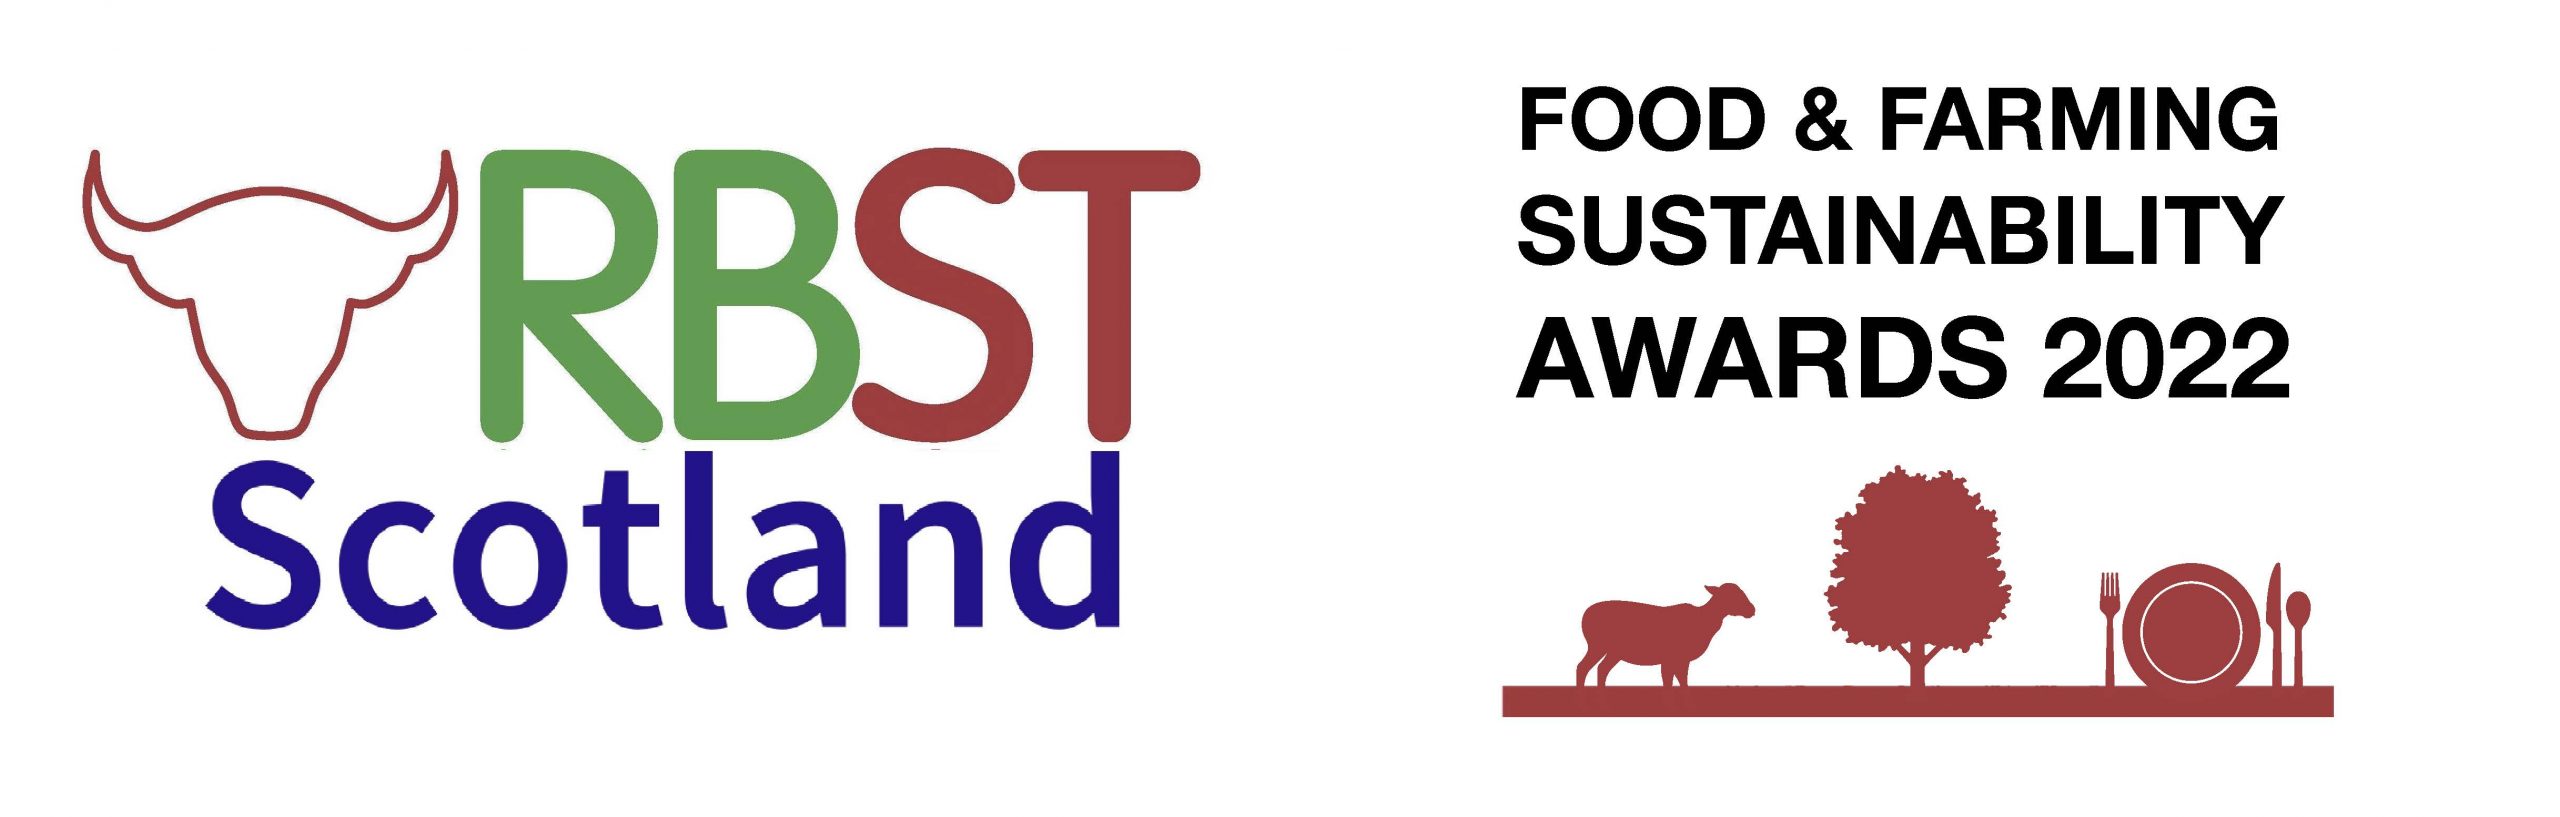 RBST Scotland Food & Farming Sustainability Awards Logo